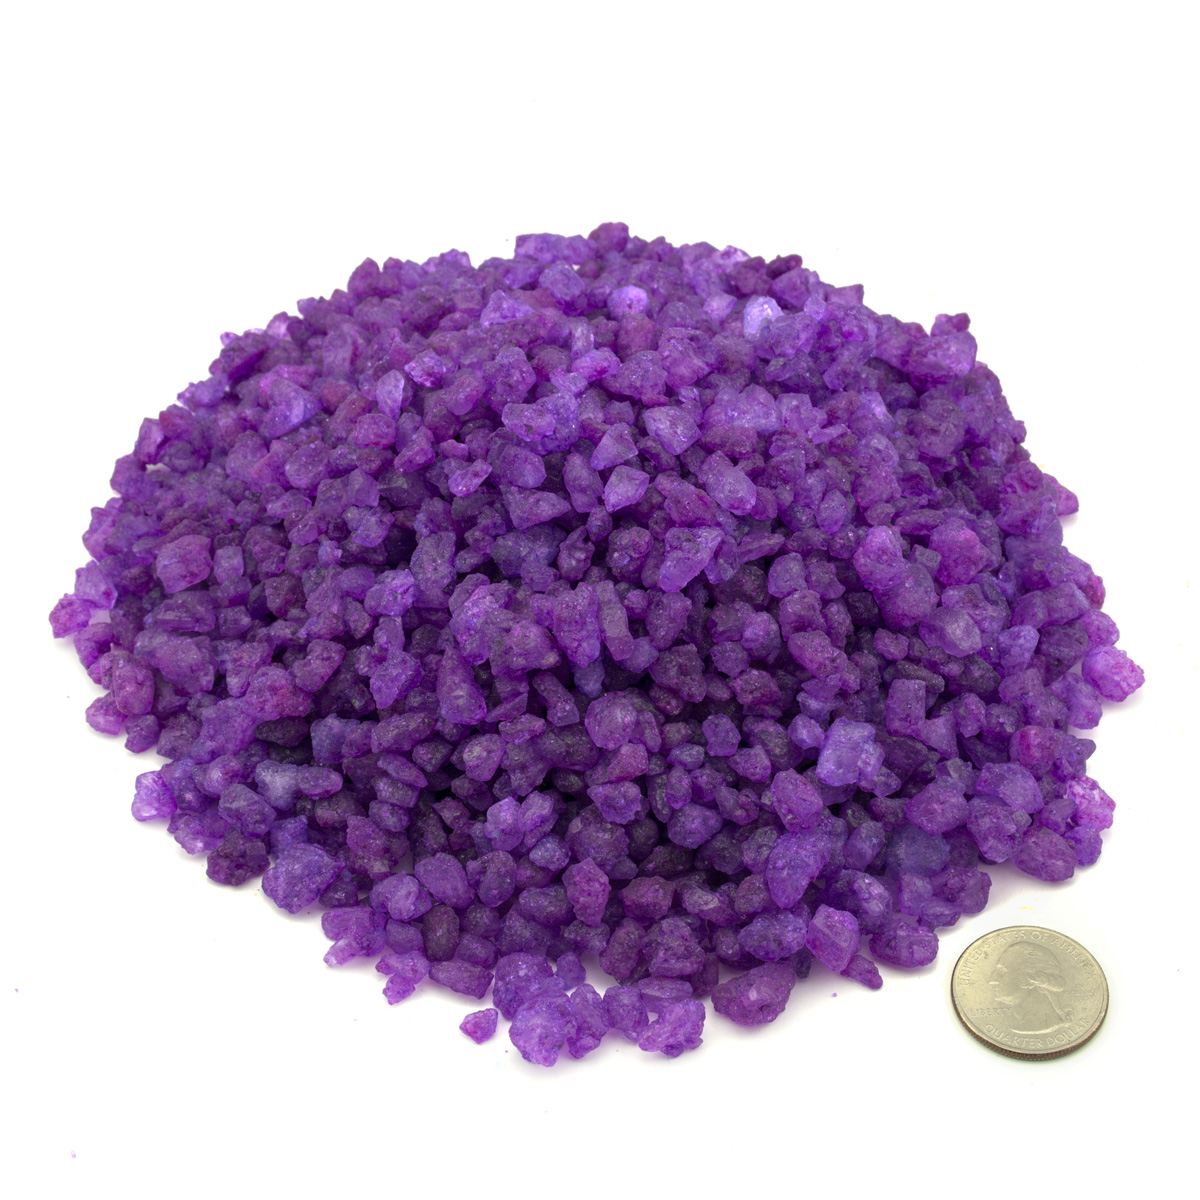 Purple/Grape Rock Candy Crystals